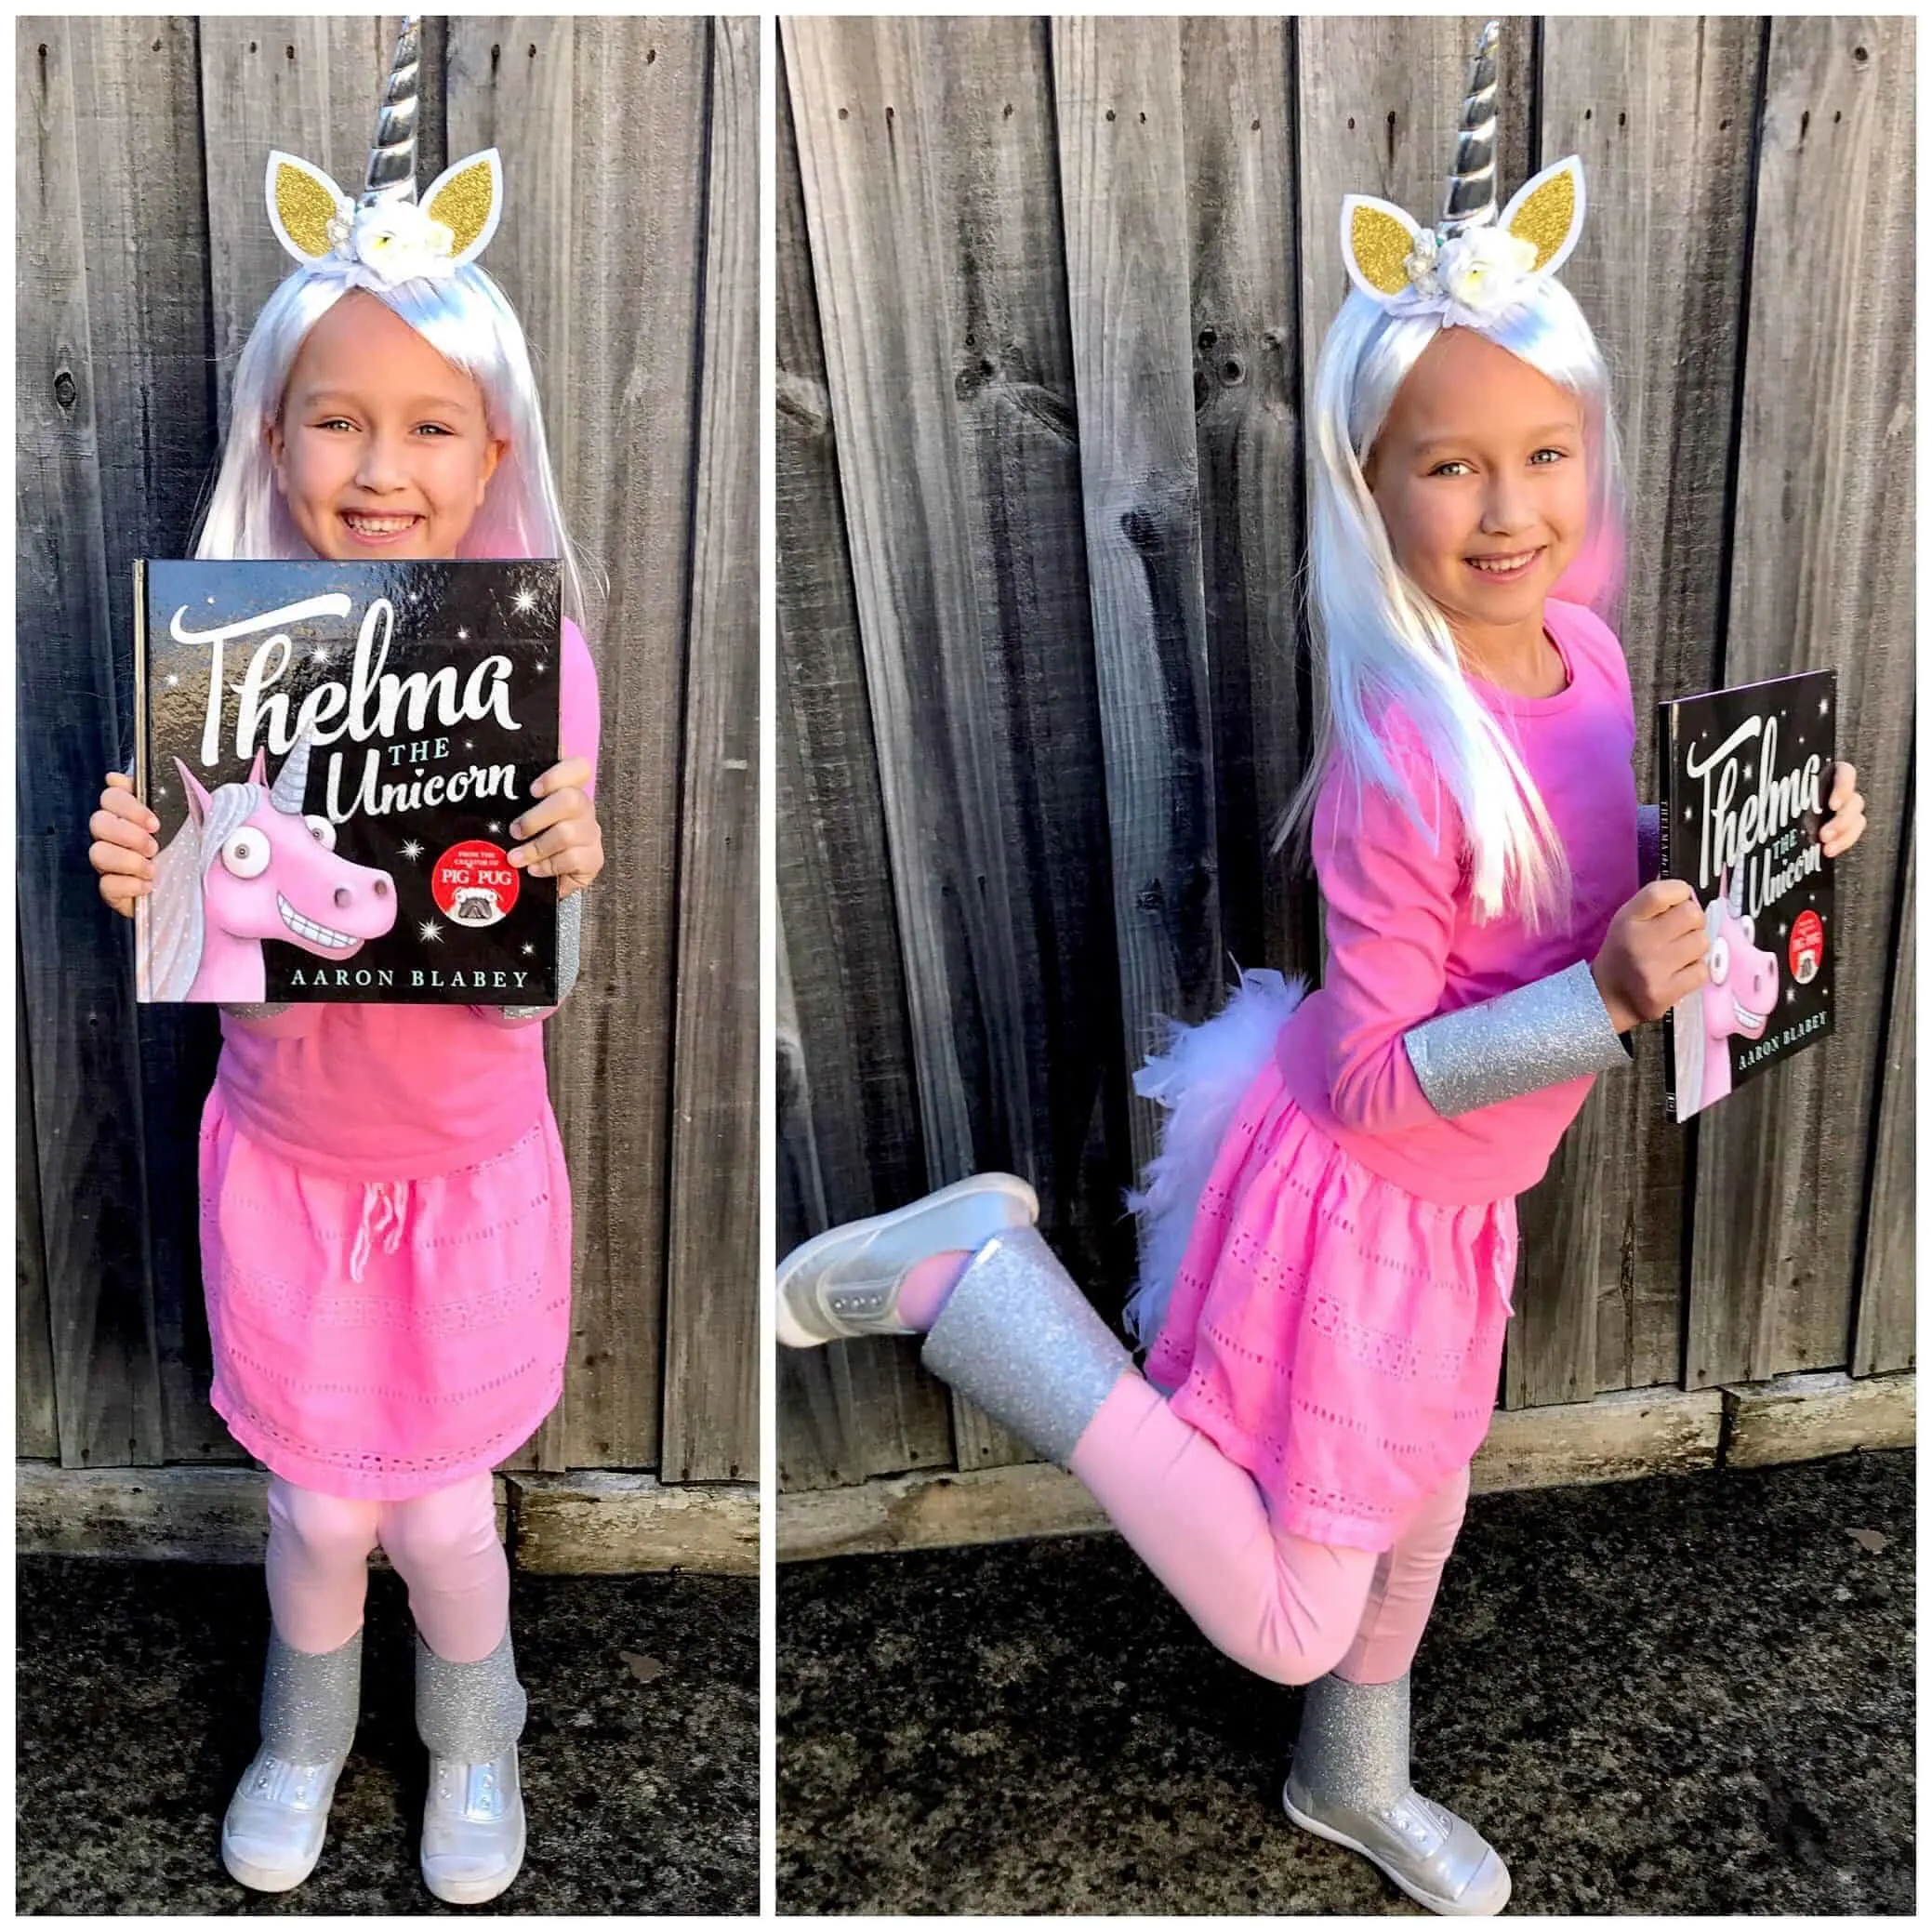 Thelma the unicorn book week costume ideas